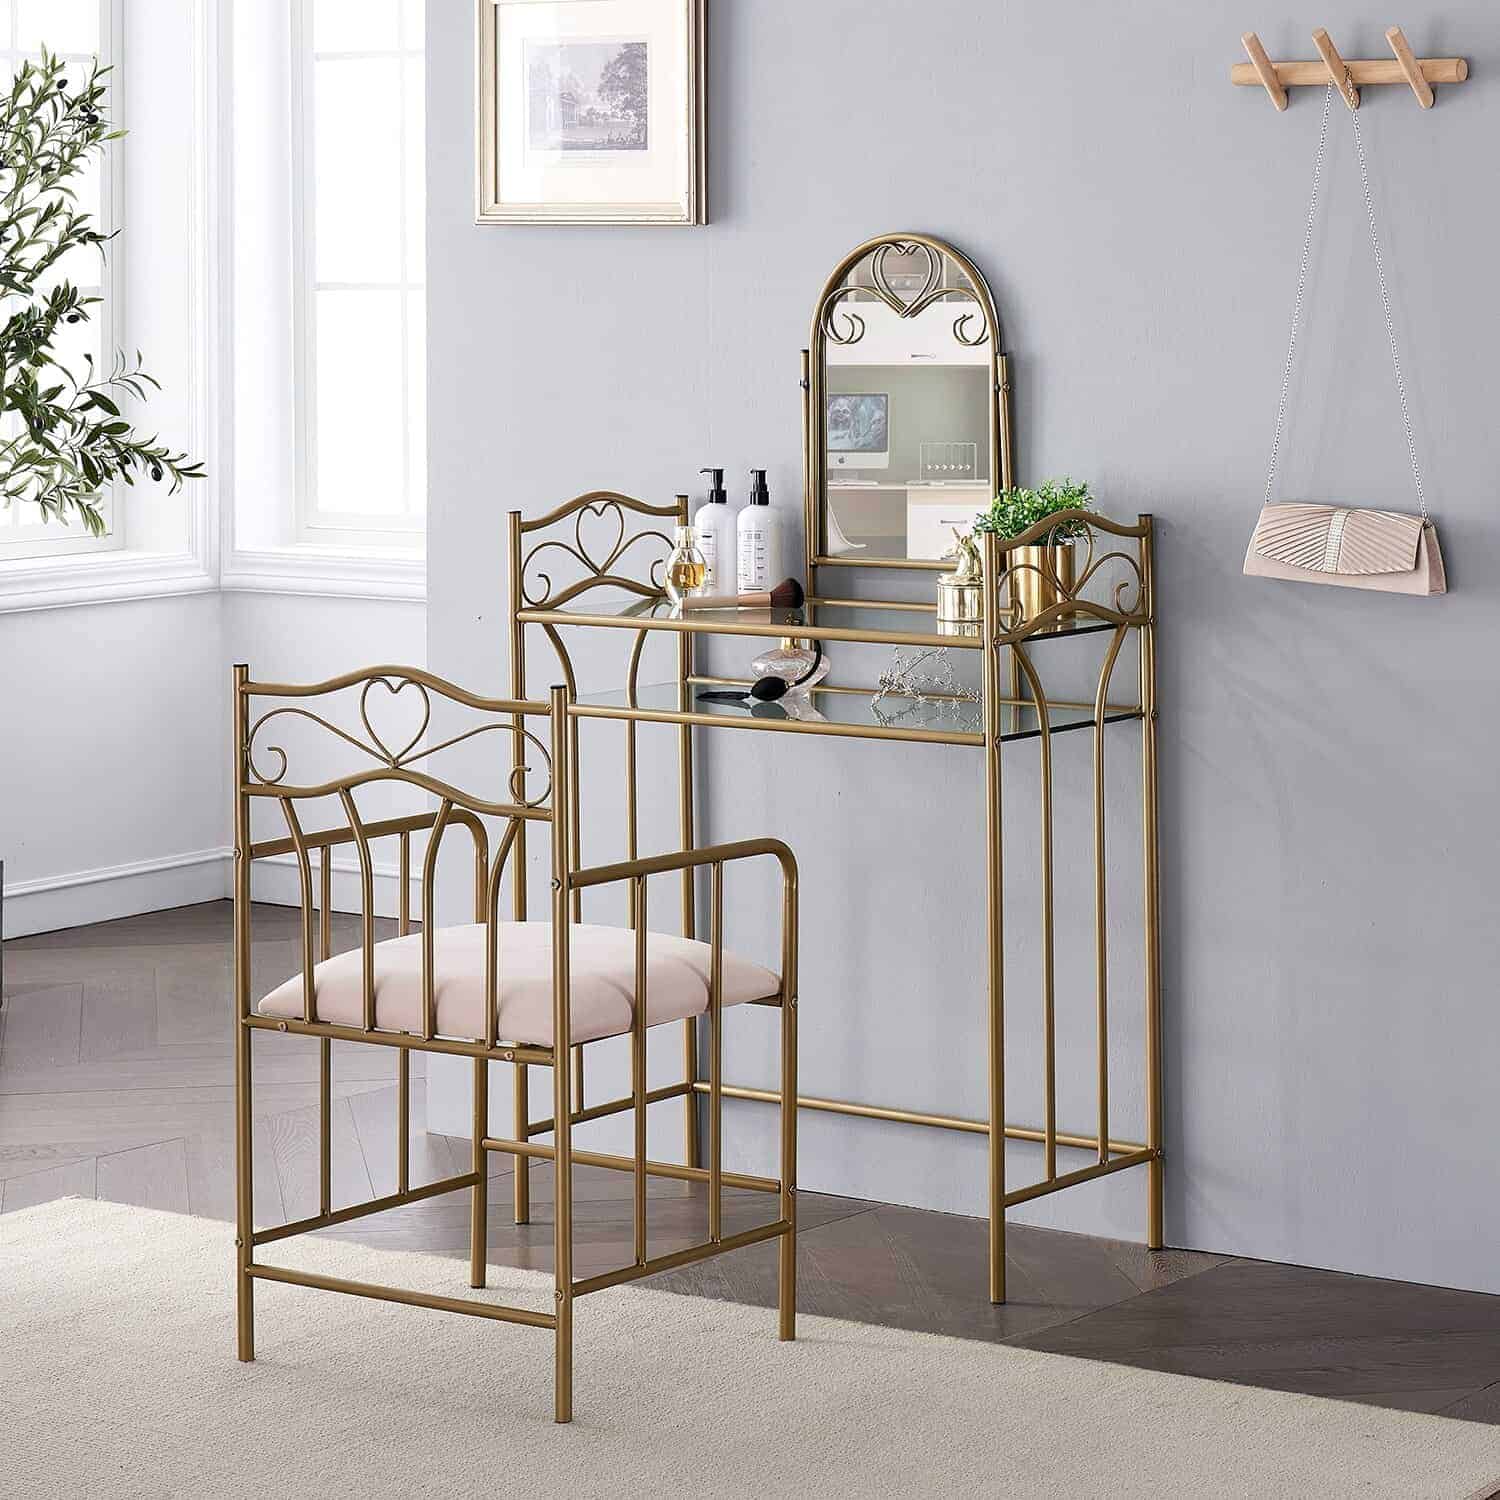 An elegant metallic dresser with a matching chair, kept in a well-lit room.